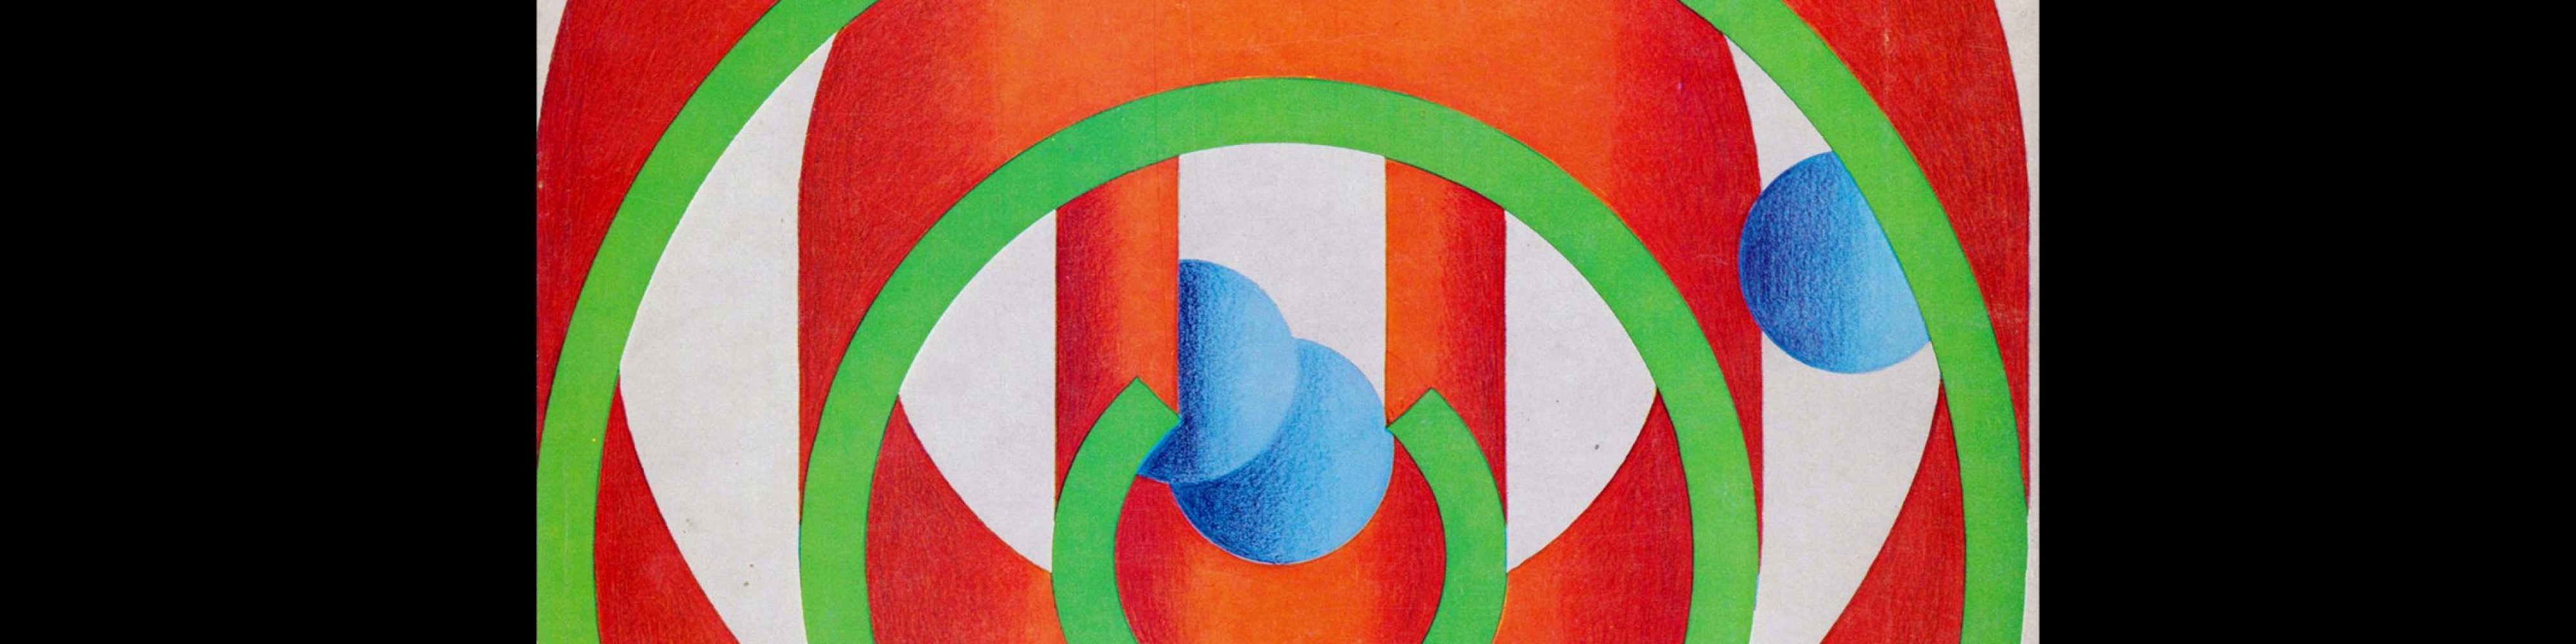 Novum Gebrauchsgraphik, 2, 1973. Cover design by Toni Blank